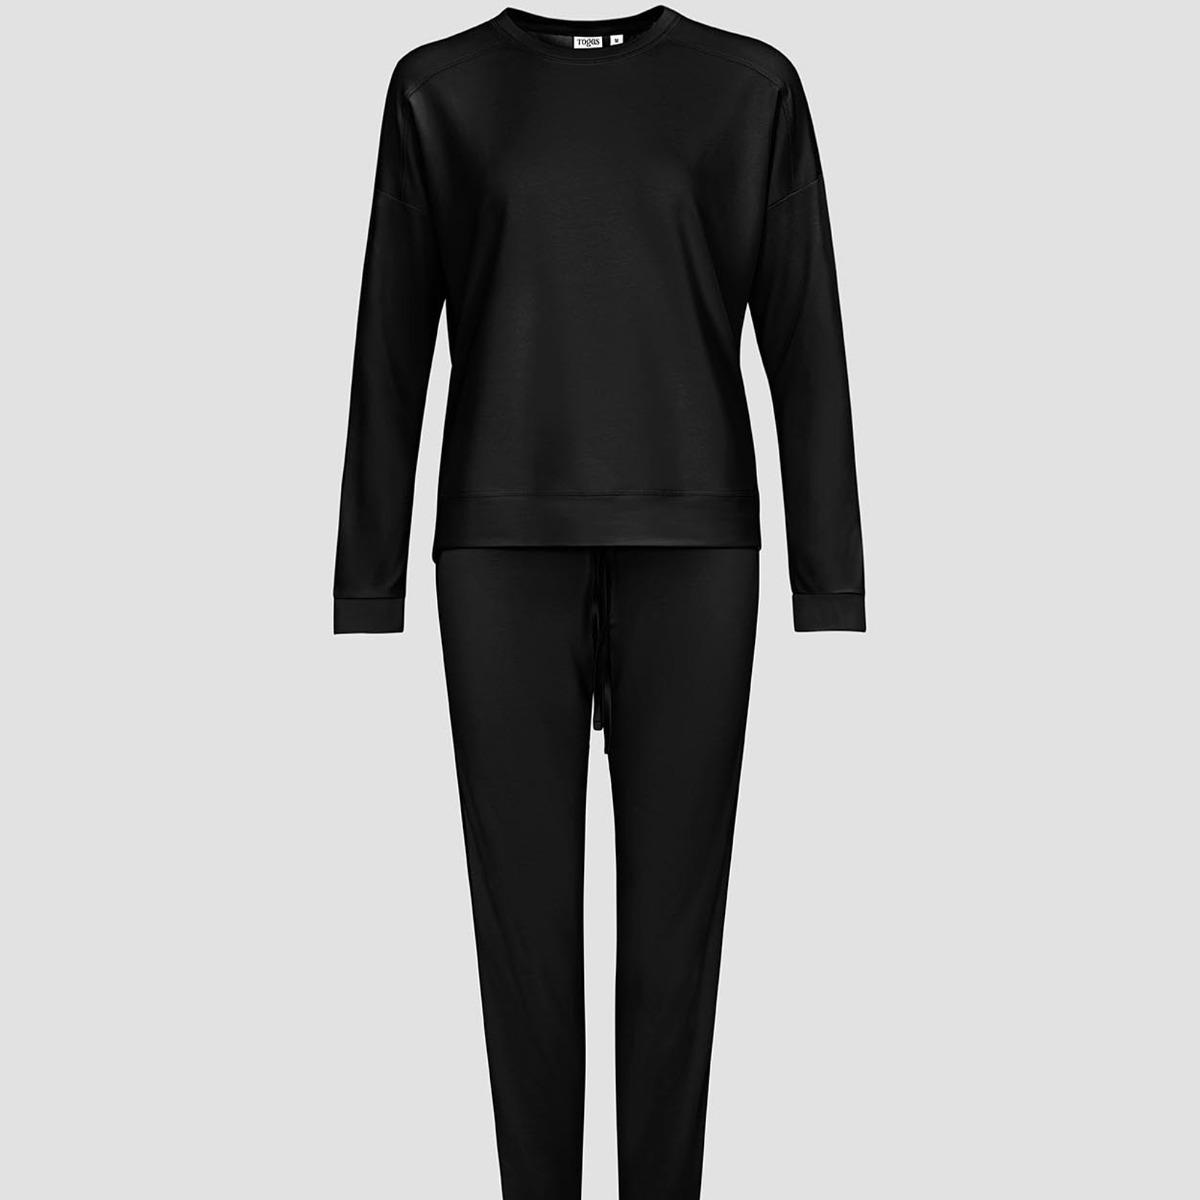 Женская пижама Togas Рене чёрная L (48)